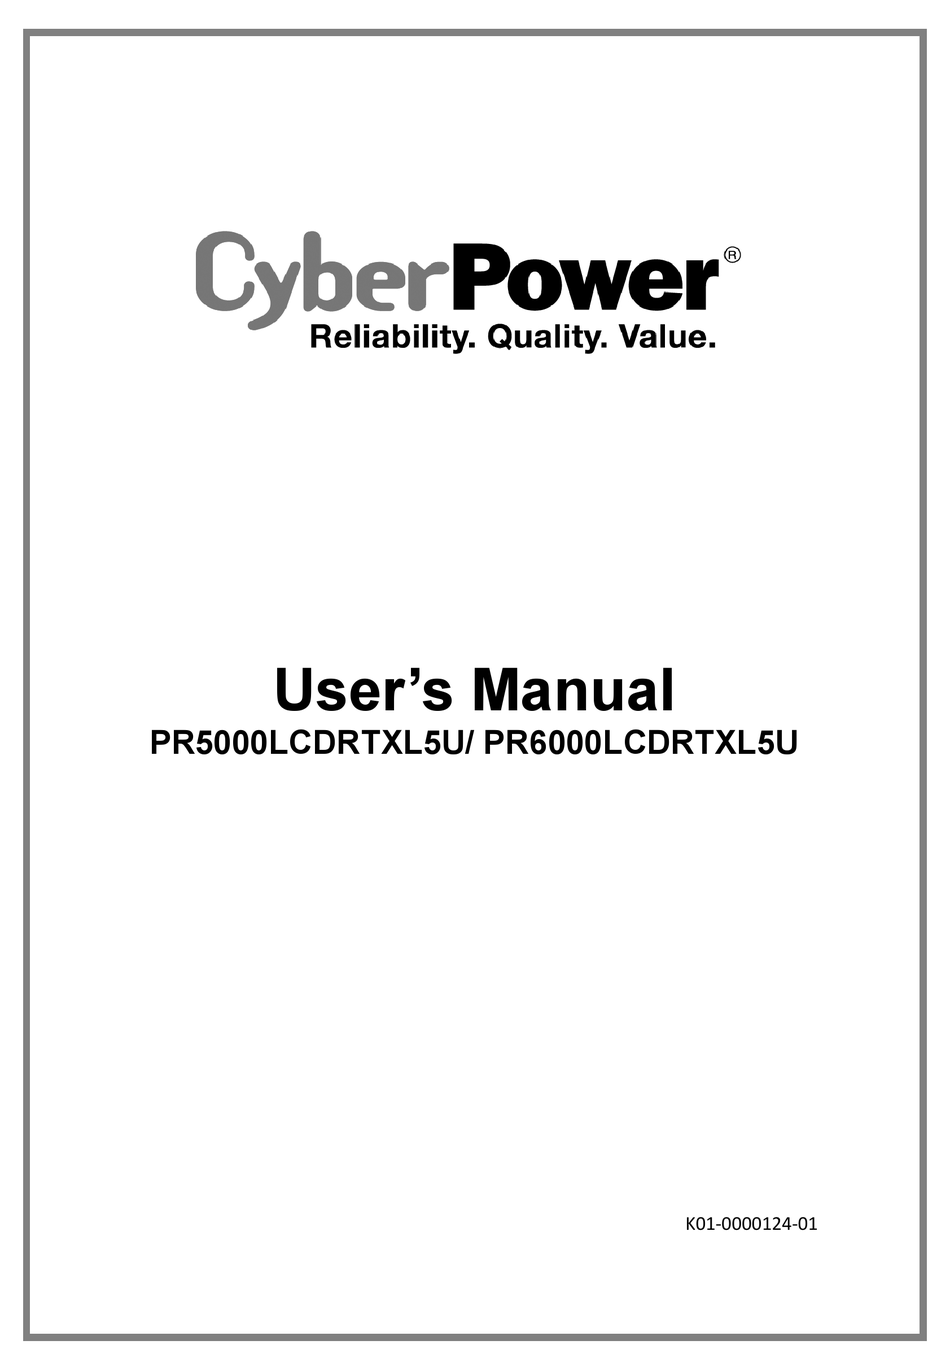 cyberpower-pr5000lcdrtxl5u-user-manual-pdf-download-manualslib